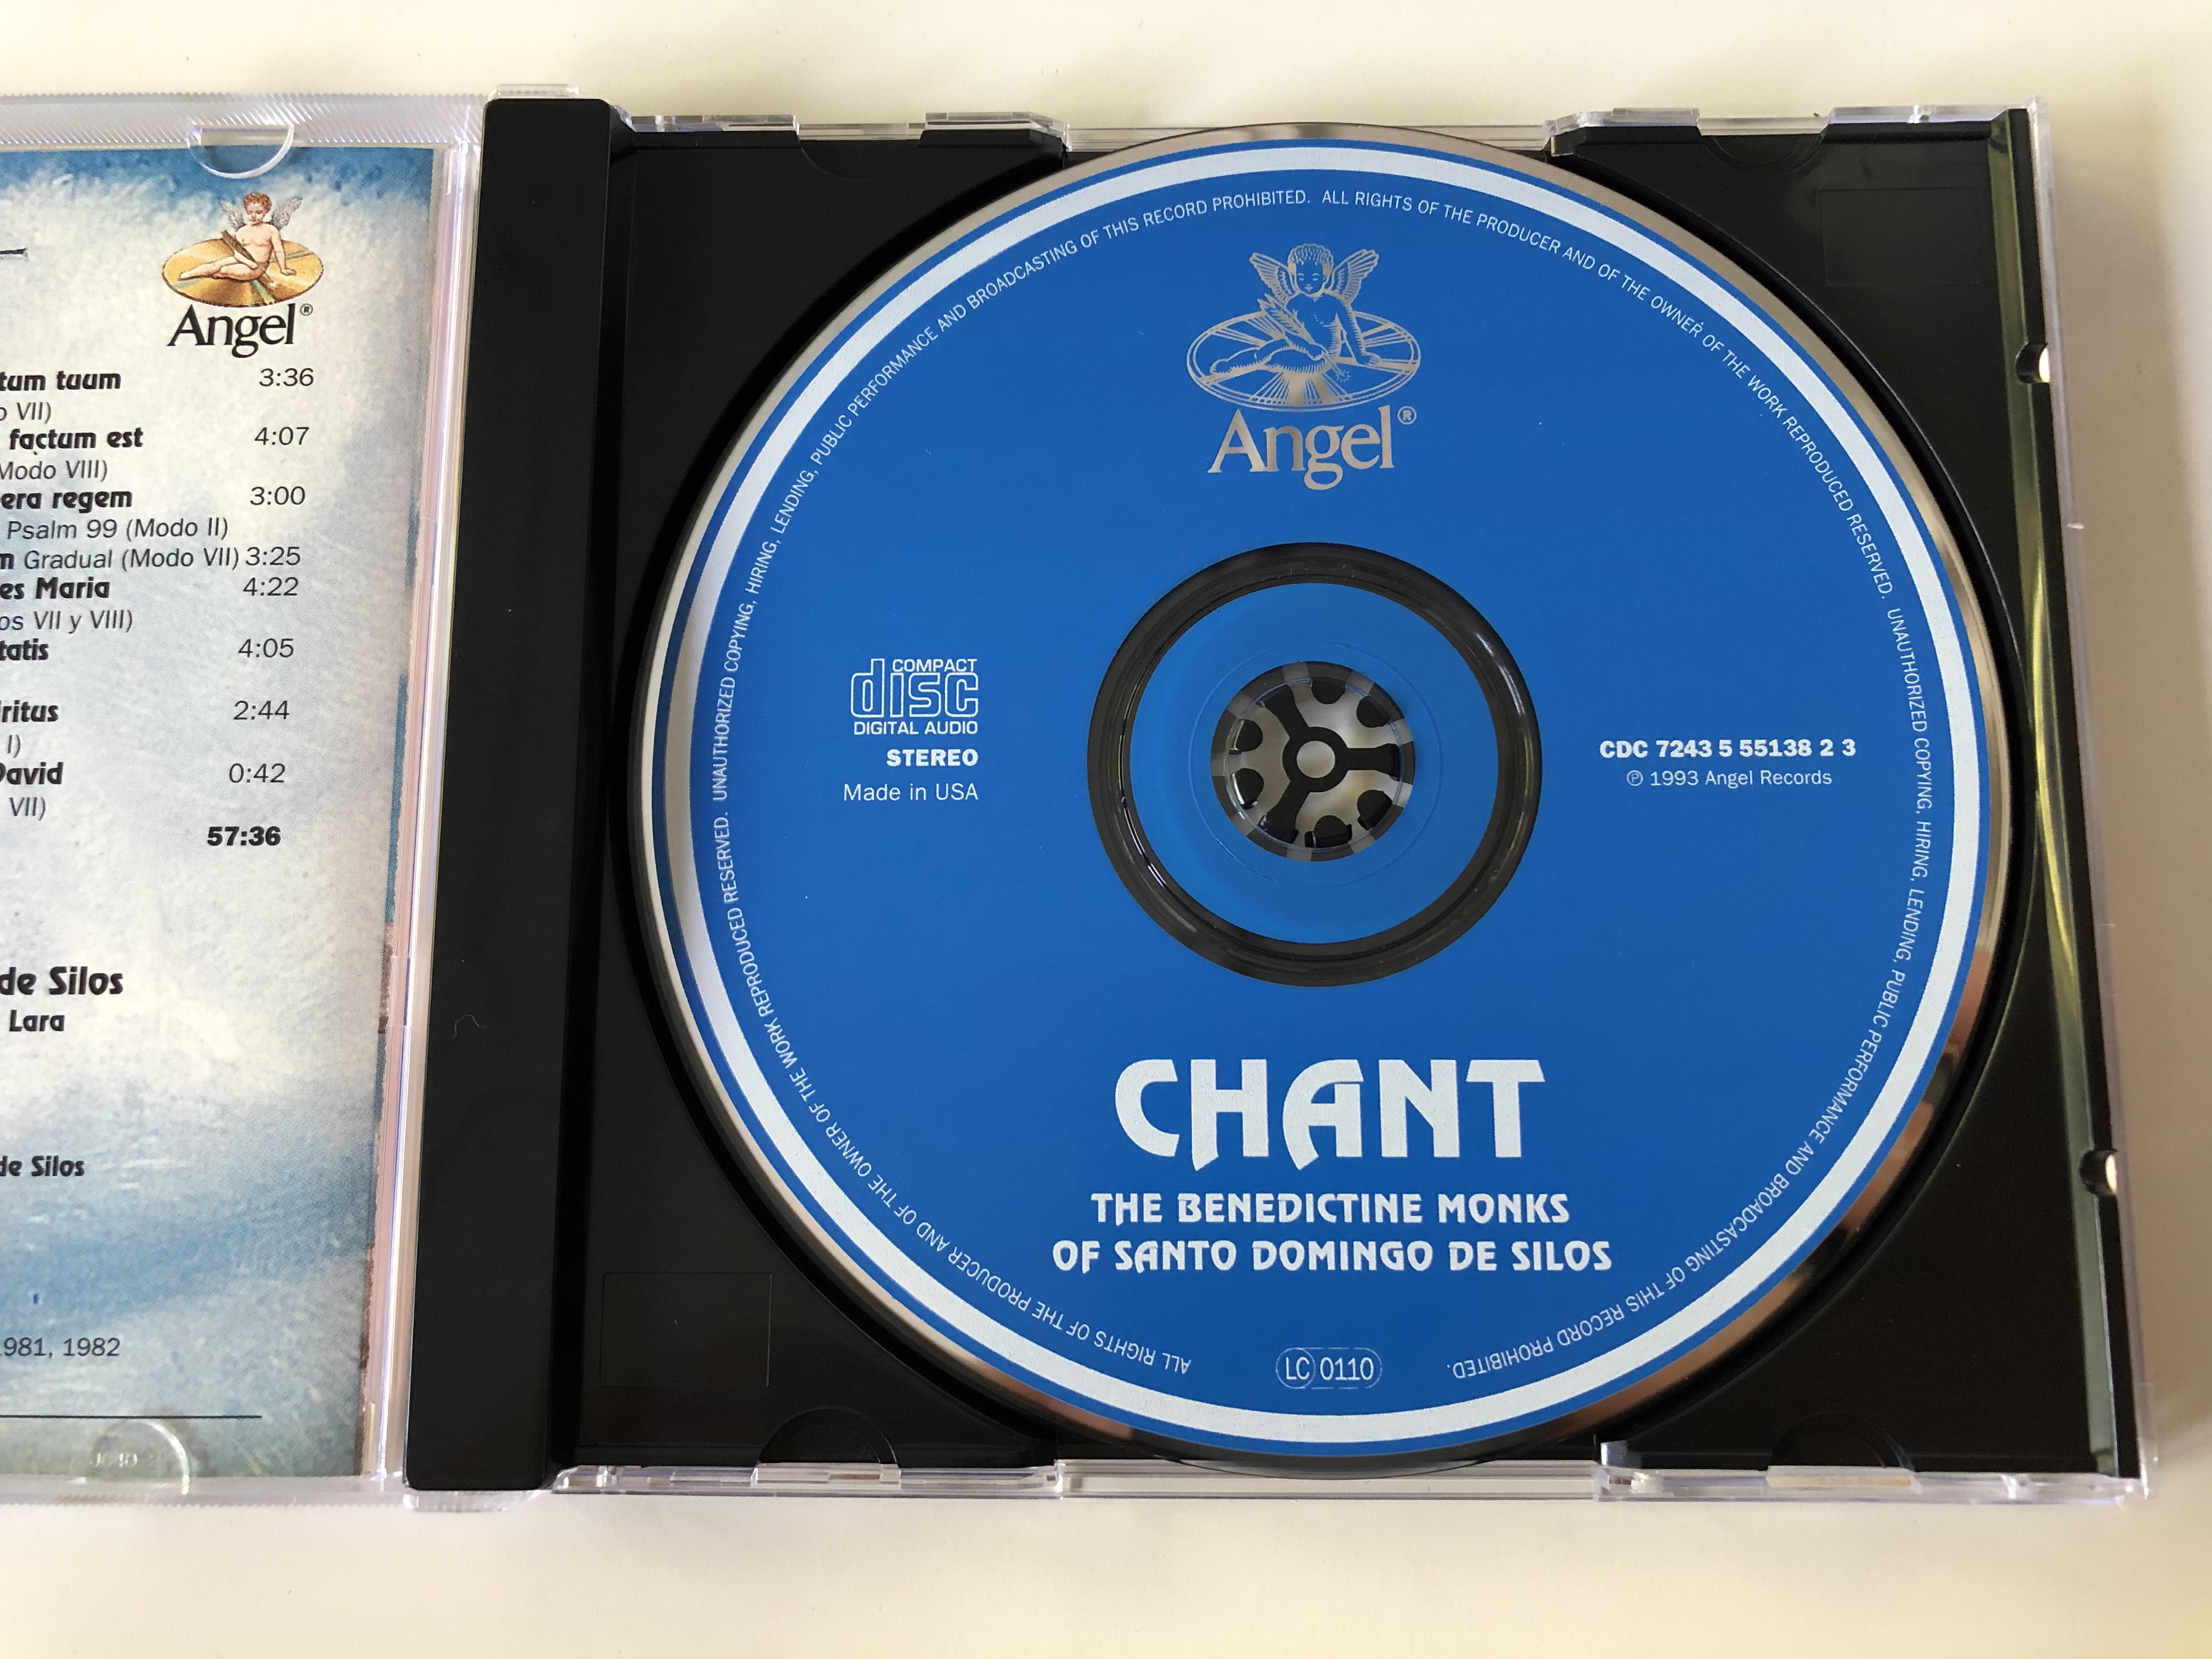 chant-the-benedictine-monks-of-santo-domingo-de-silos-angel-records-audio-cd-1993-stereo-cdc-7243-5-55138-2-3-4-.jpg